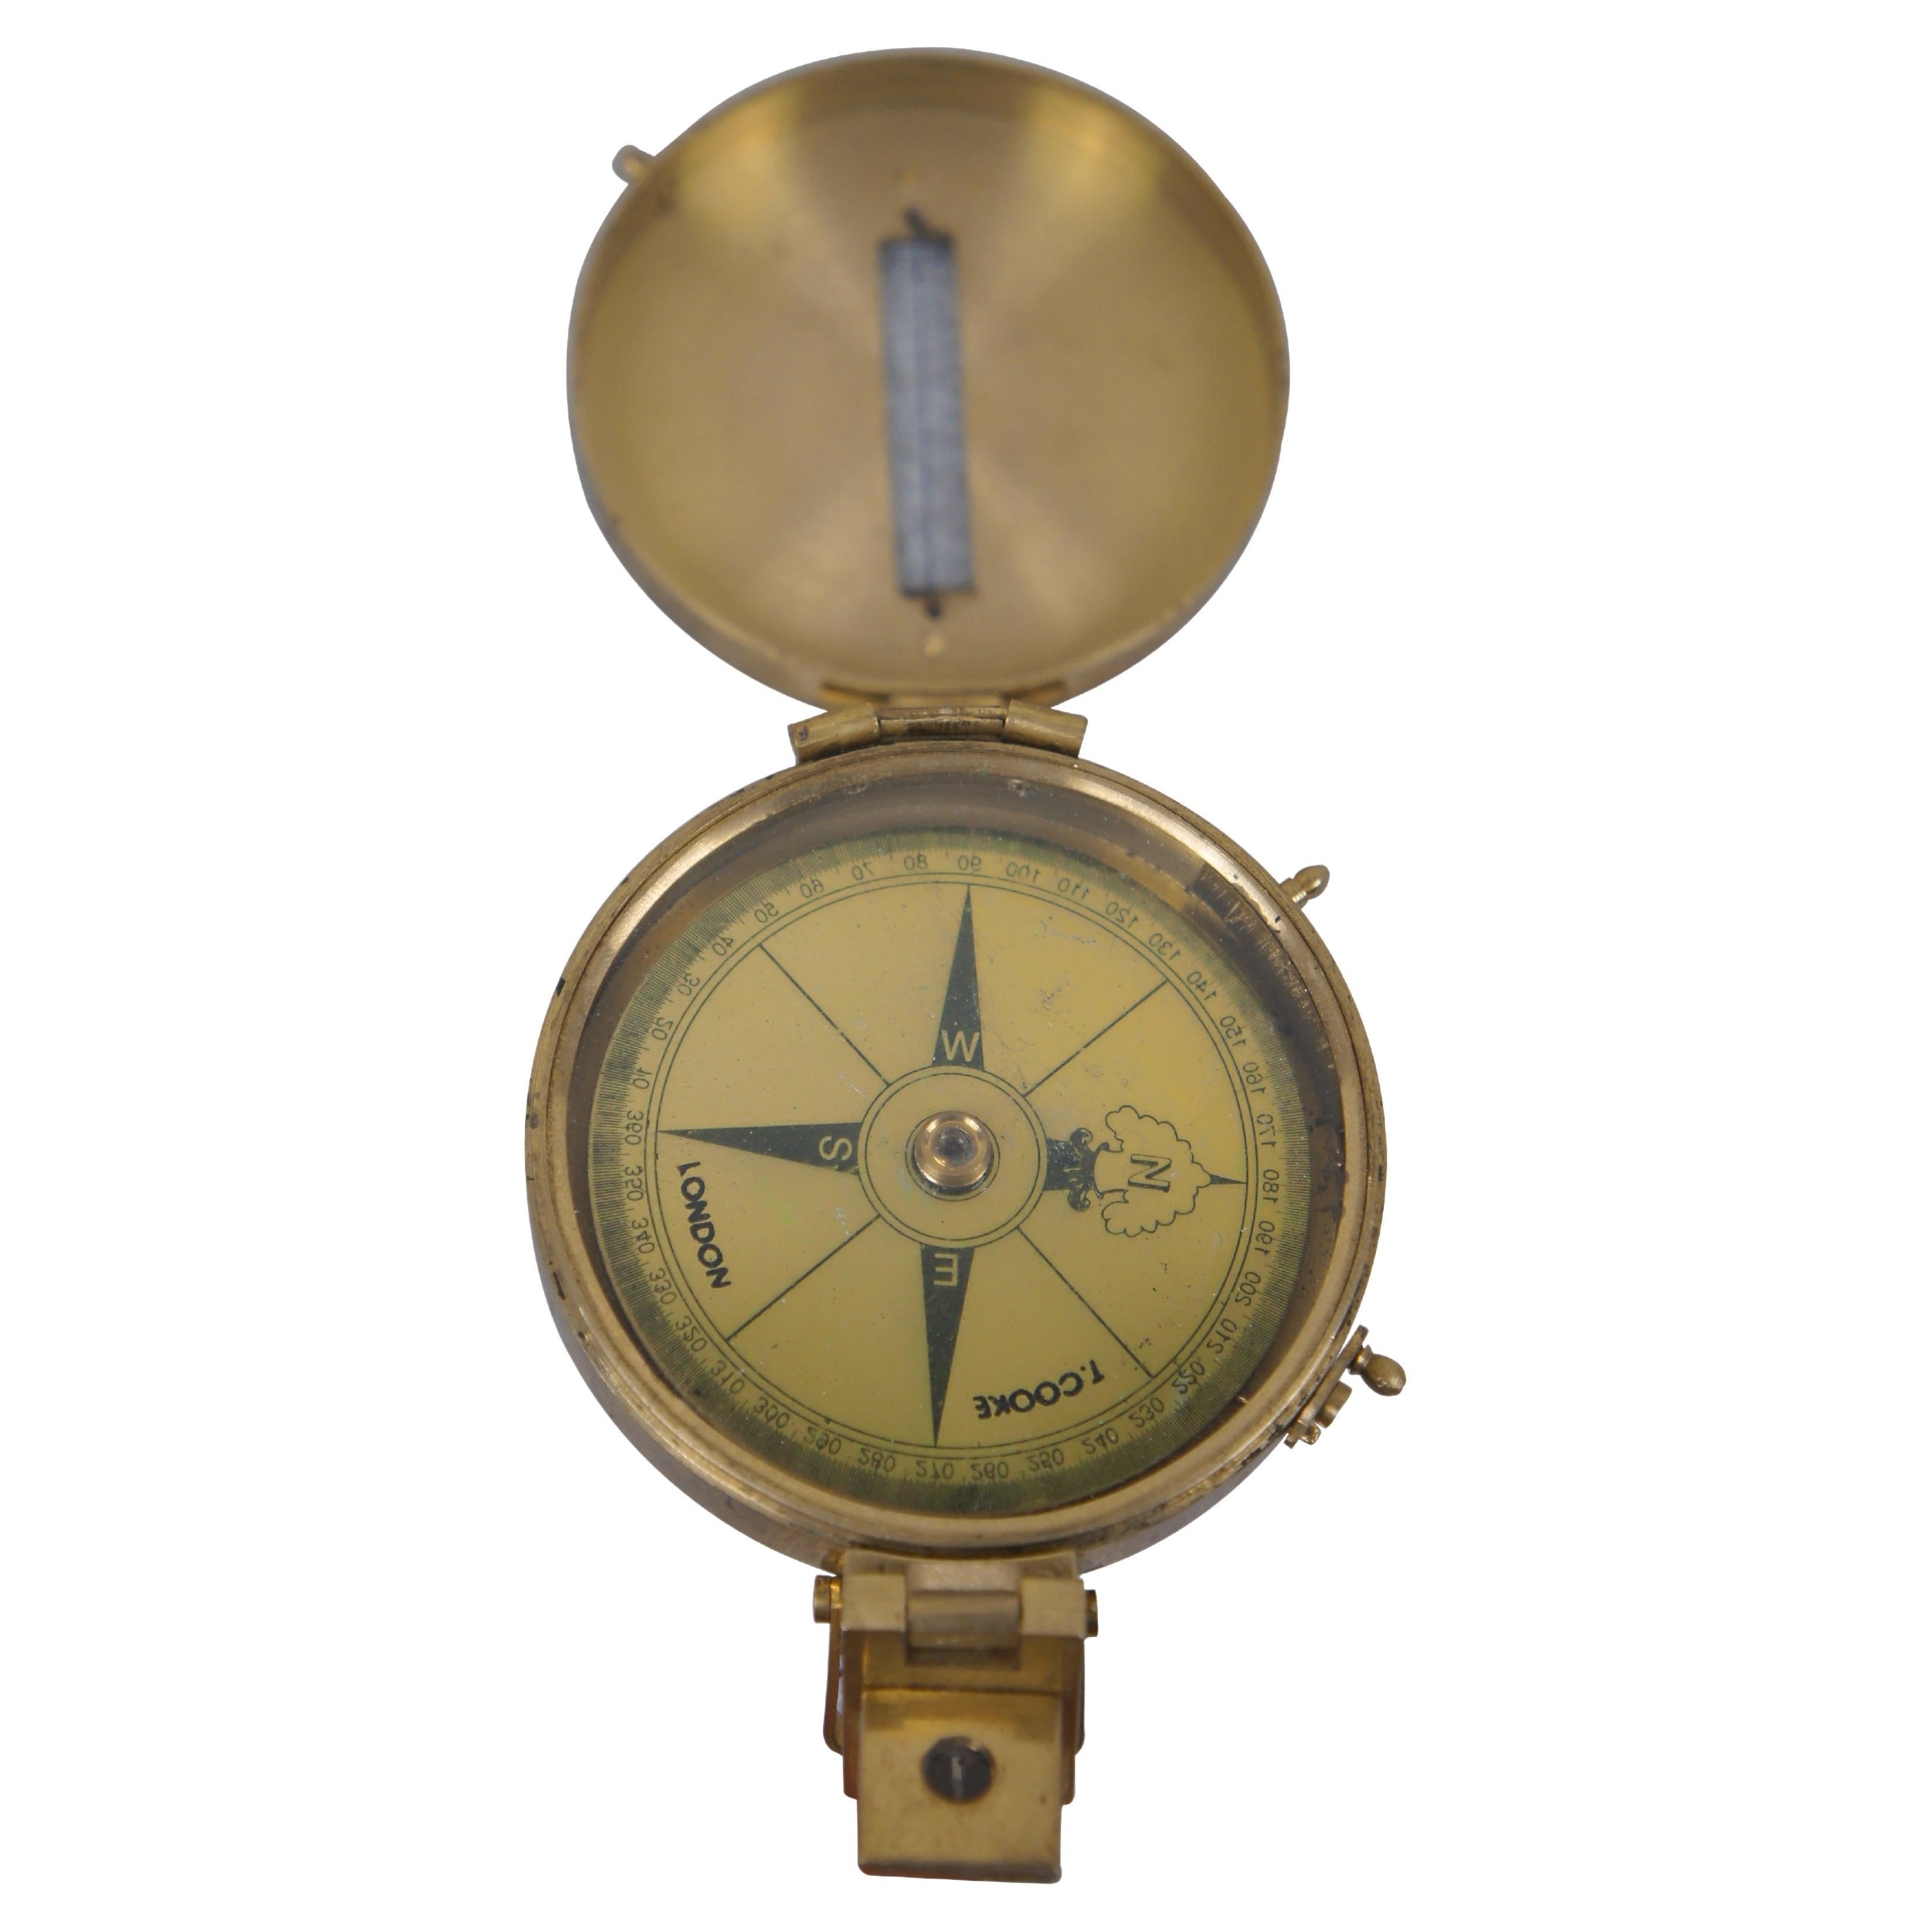 T. Cooke London Messing Prismatische nautische maritime Navigationskompass aus Messing 